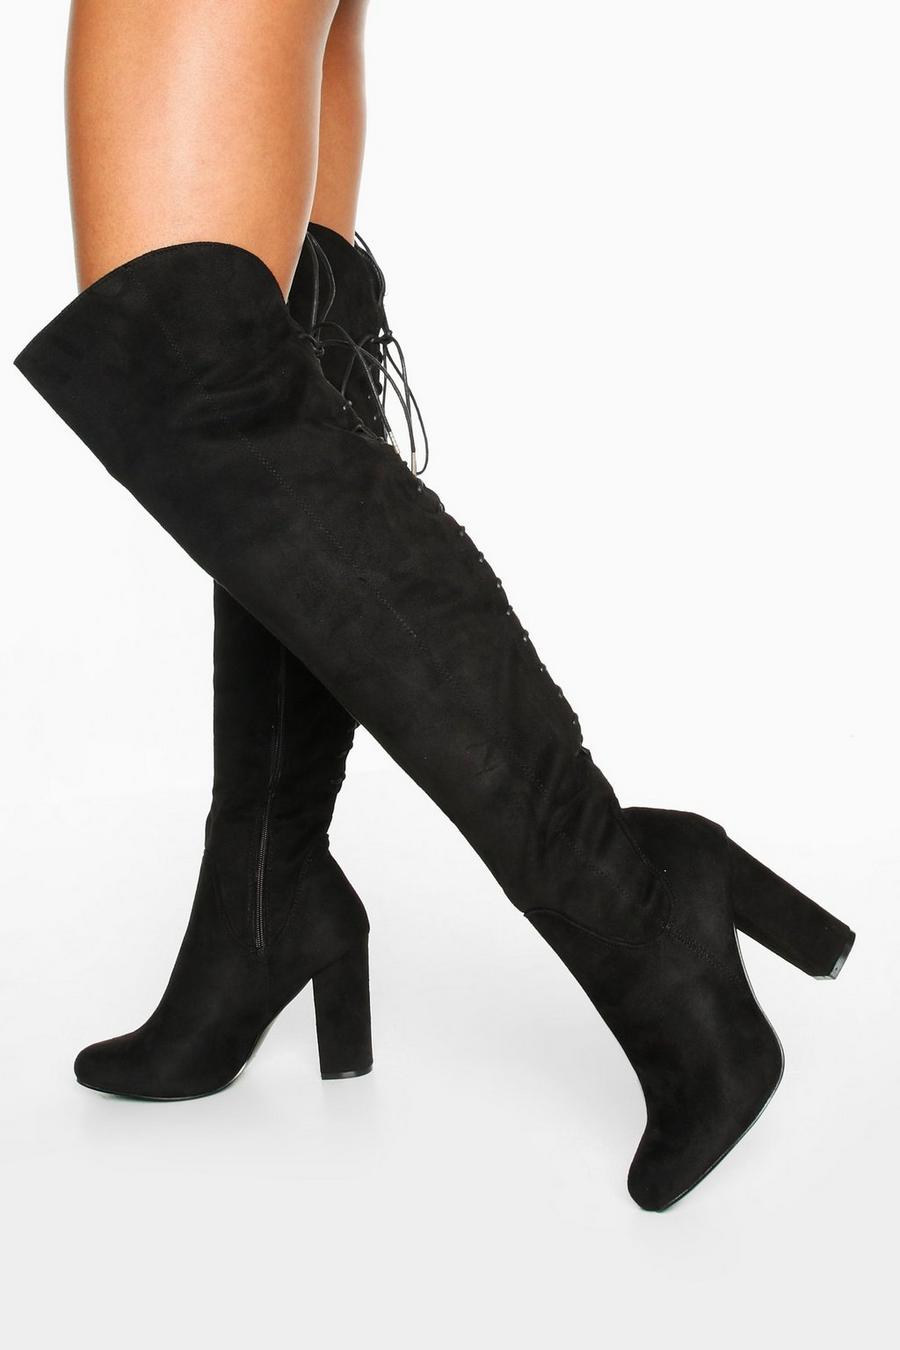 Knee High Lace Heels Hot Sale | bellvalefarms.com